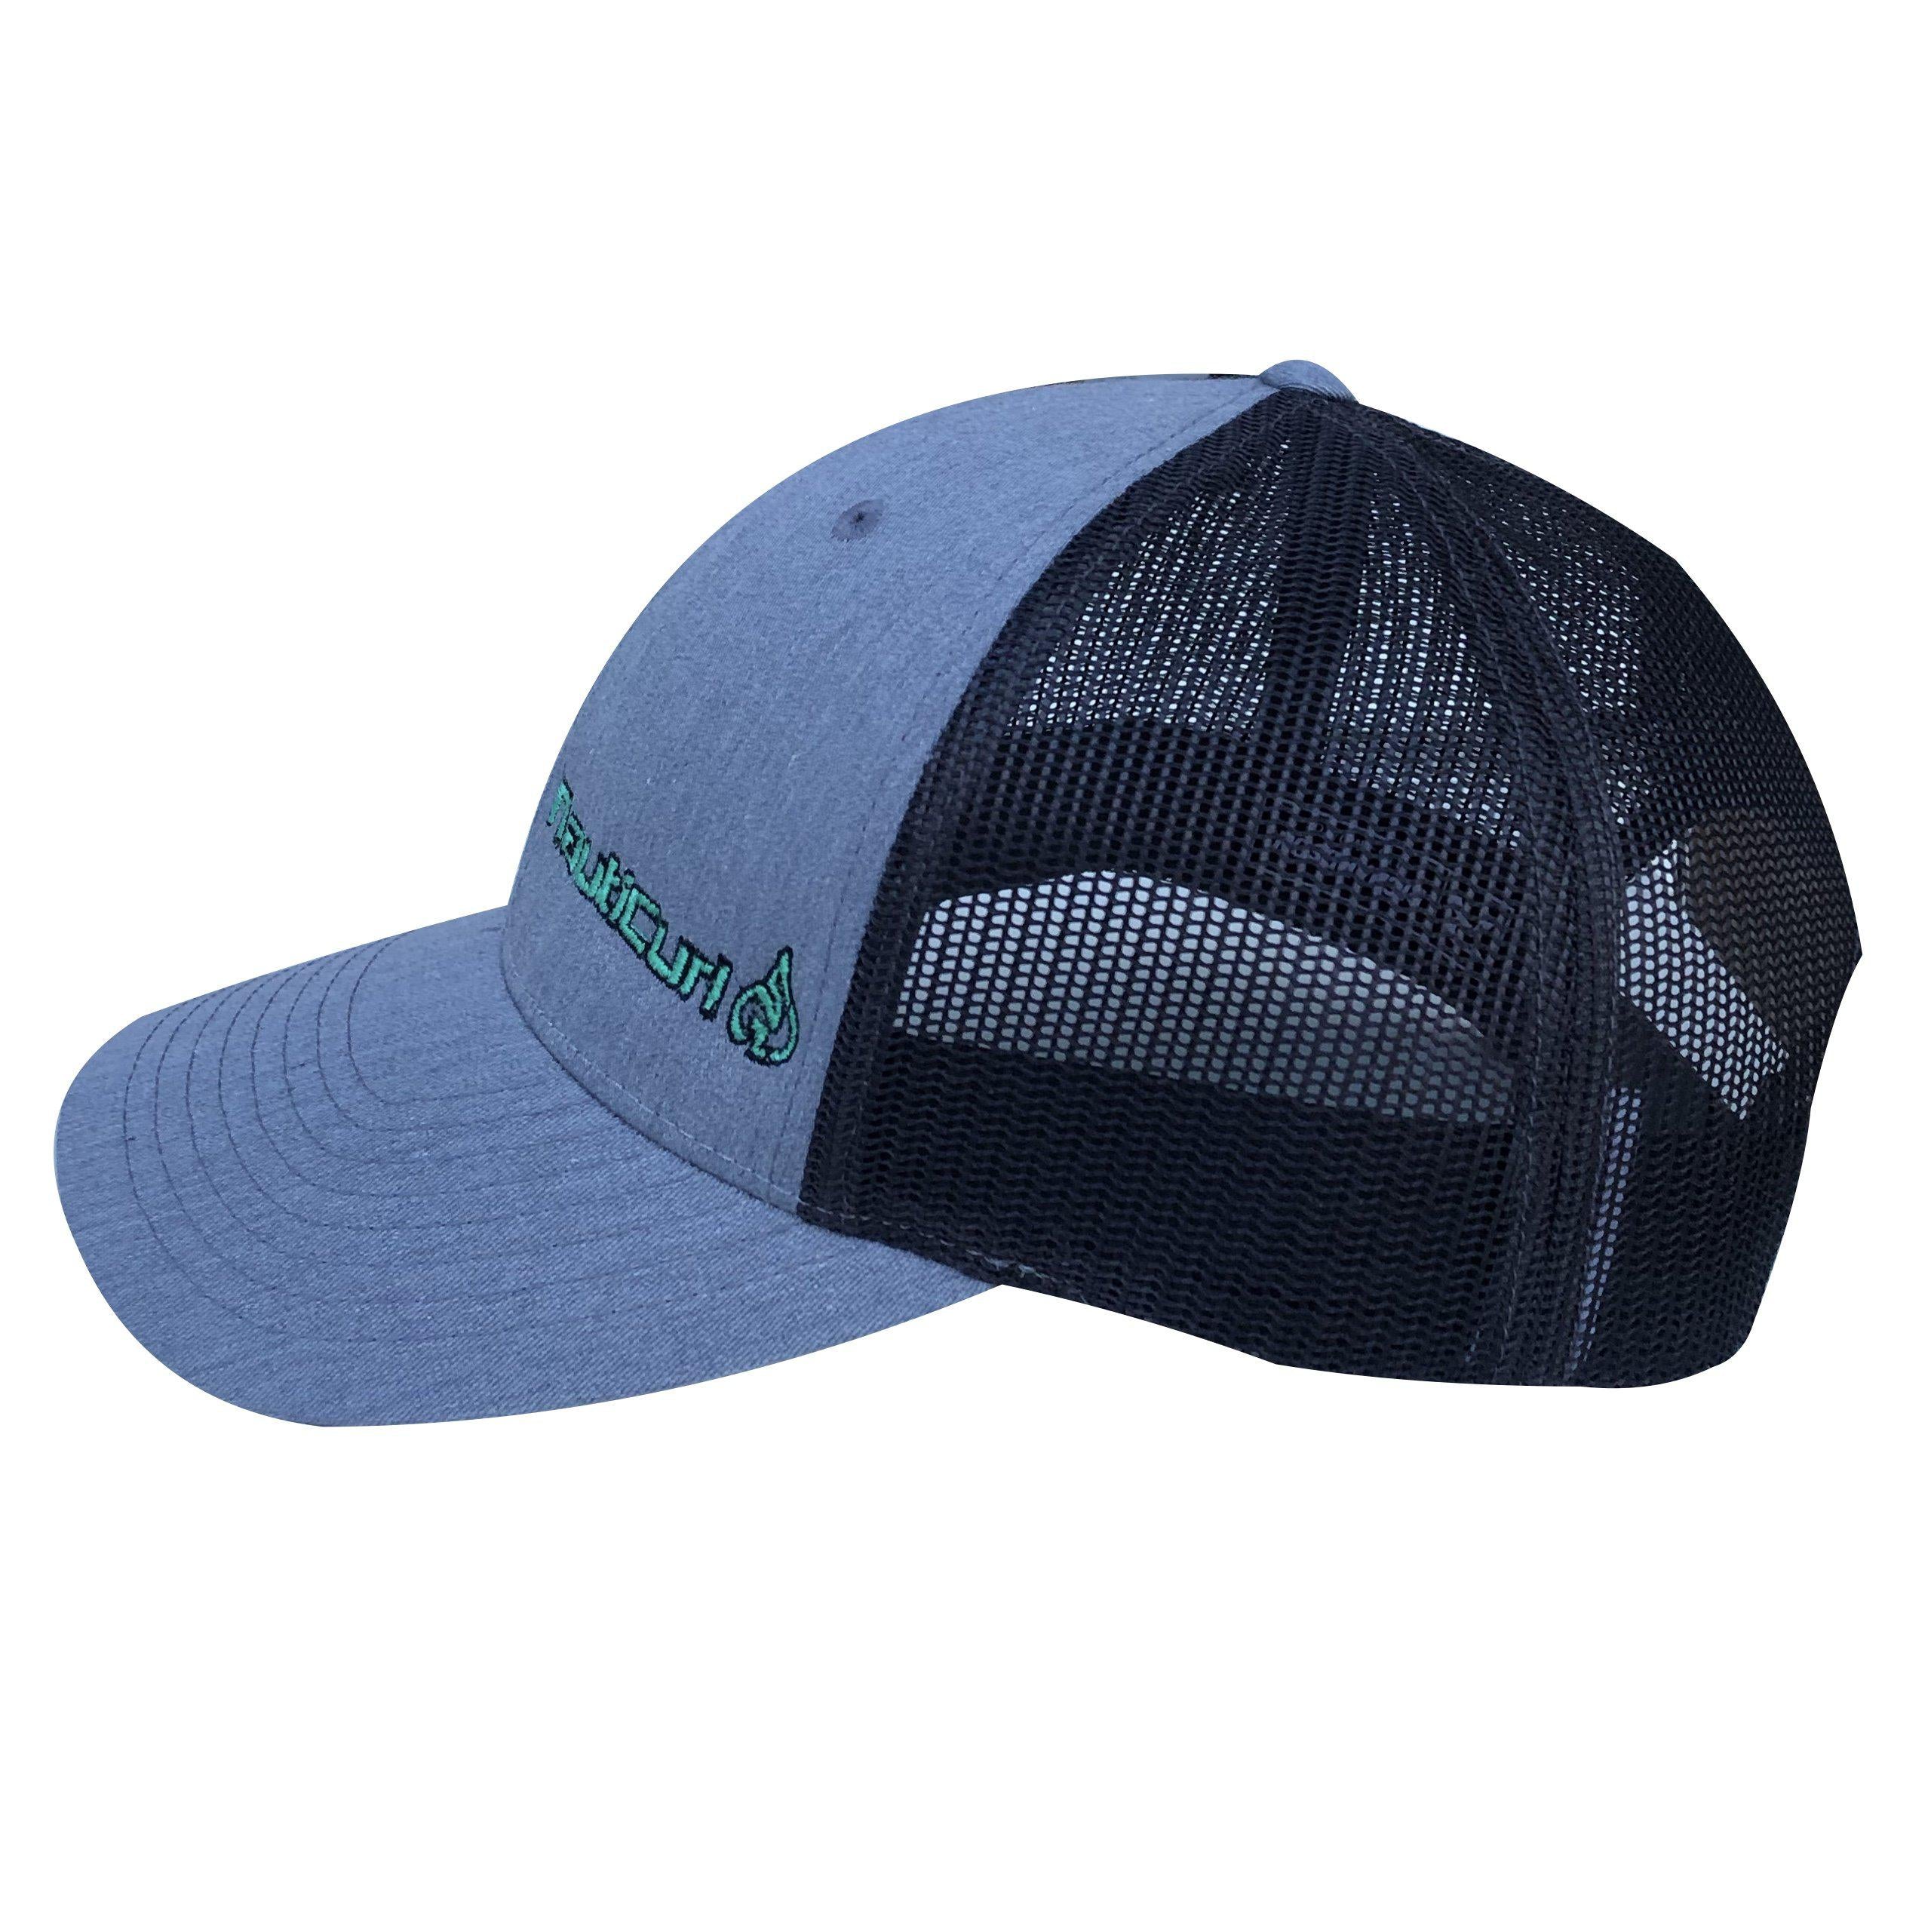 NautiCurl Mesh Hat - Surf Style Snap Back Cap